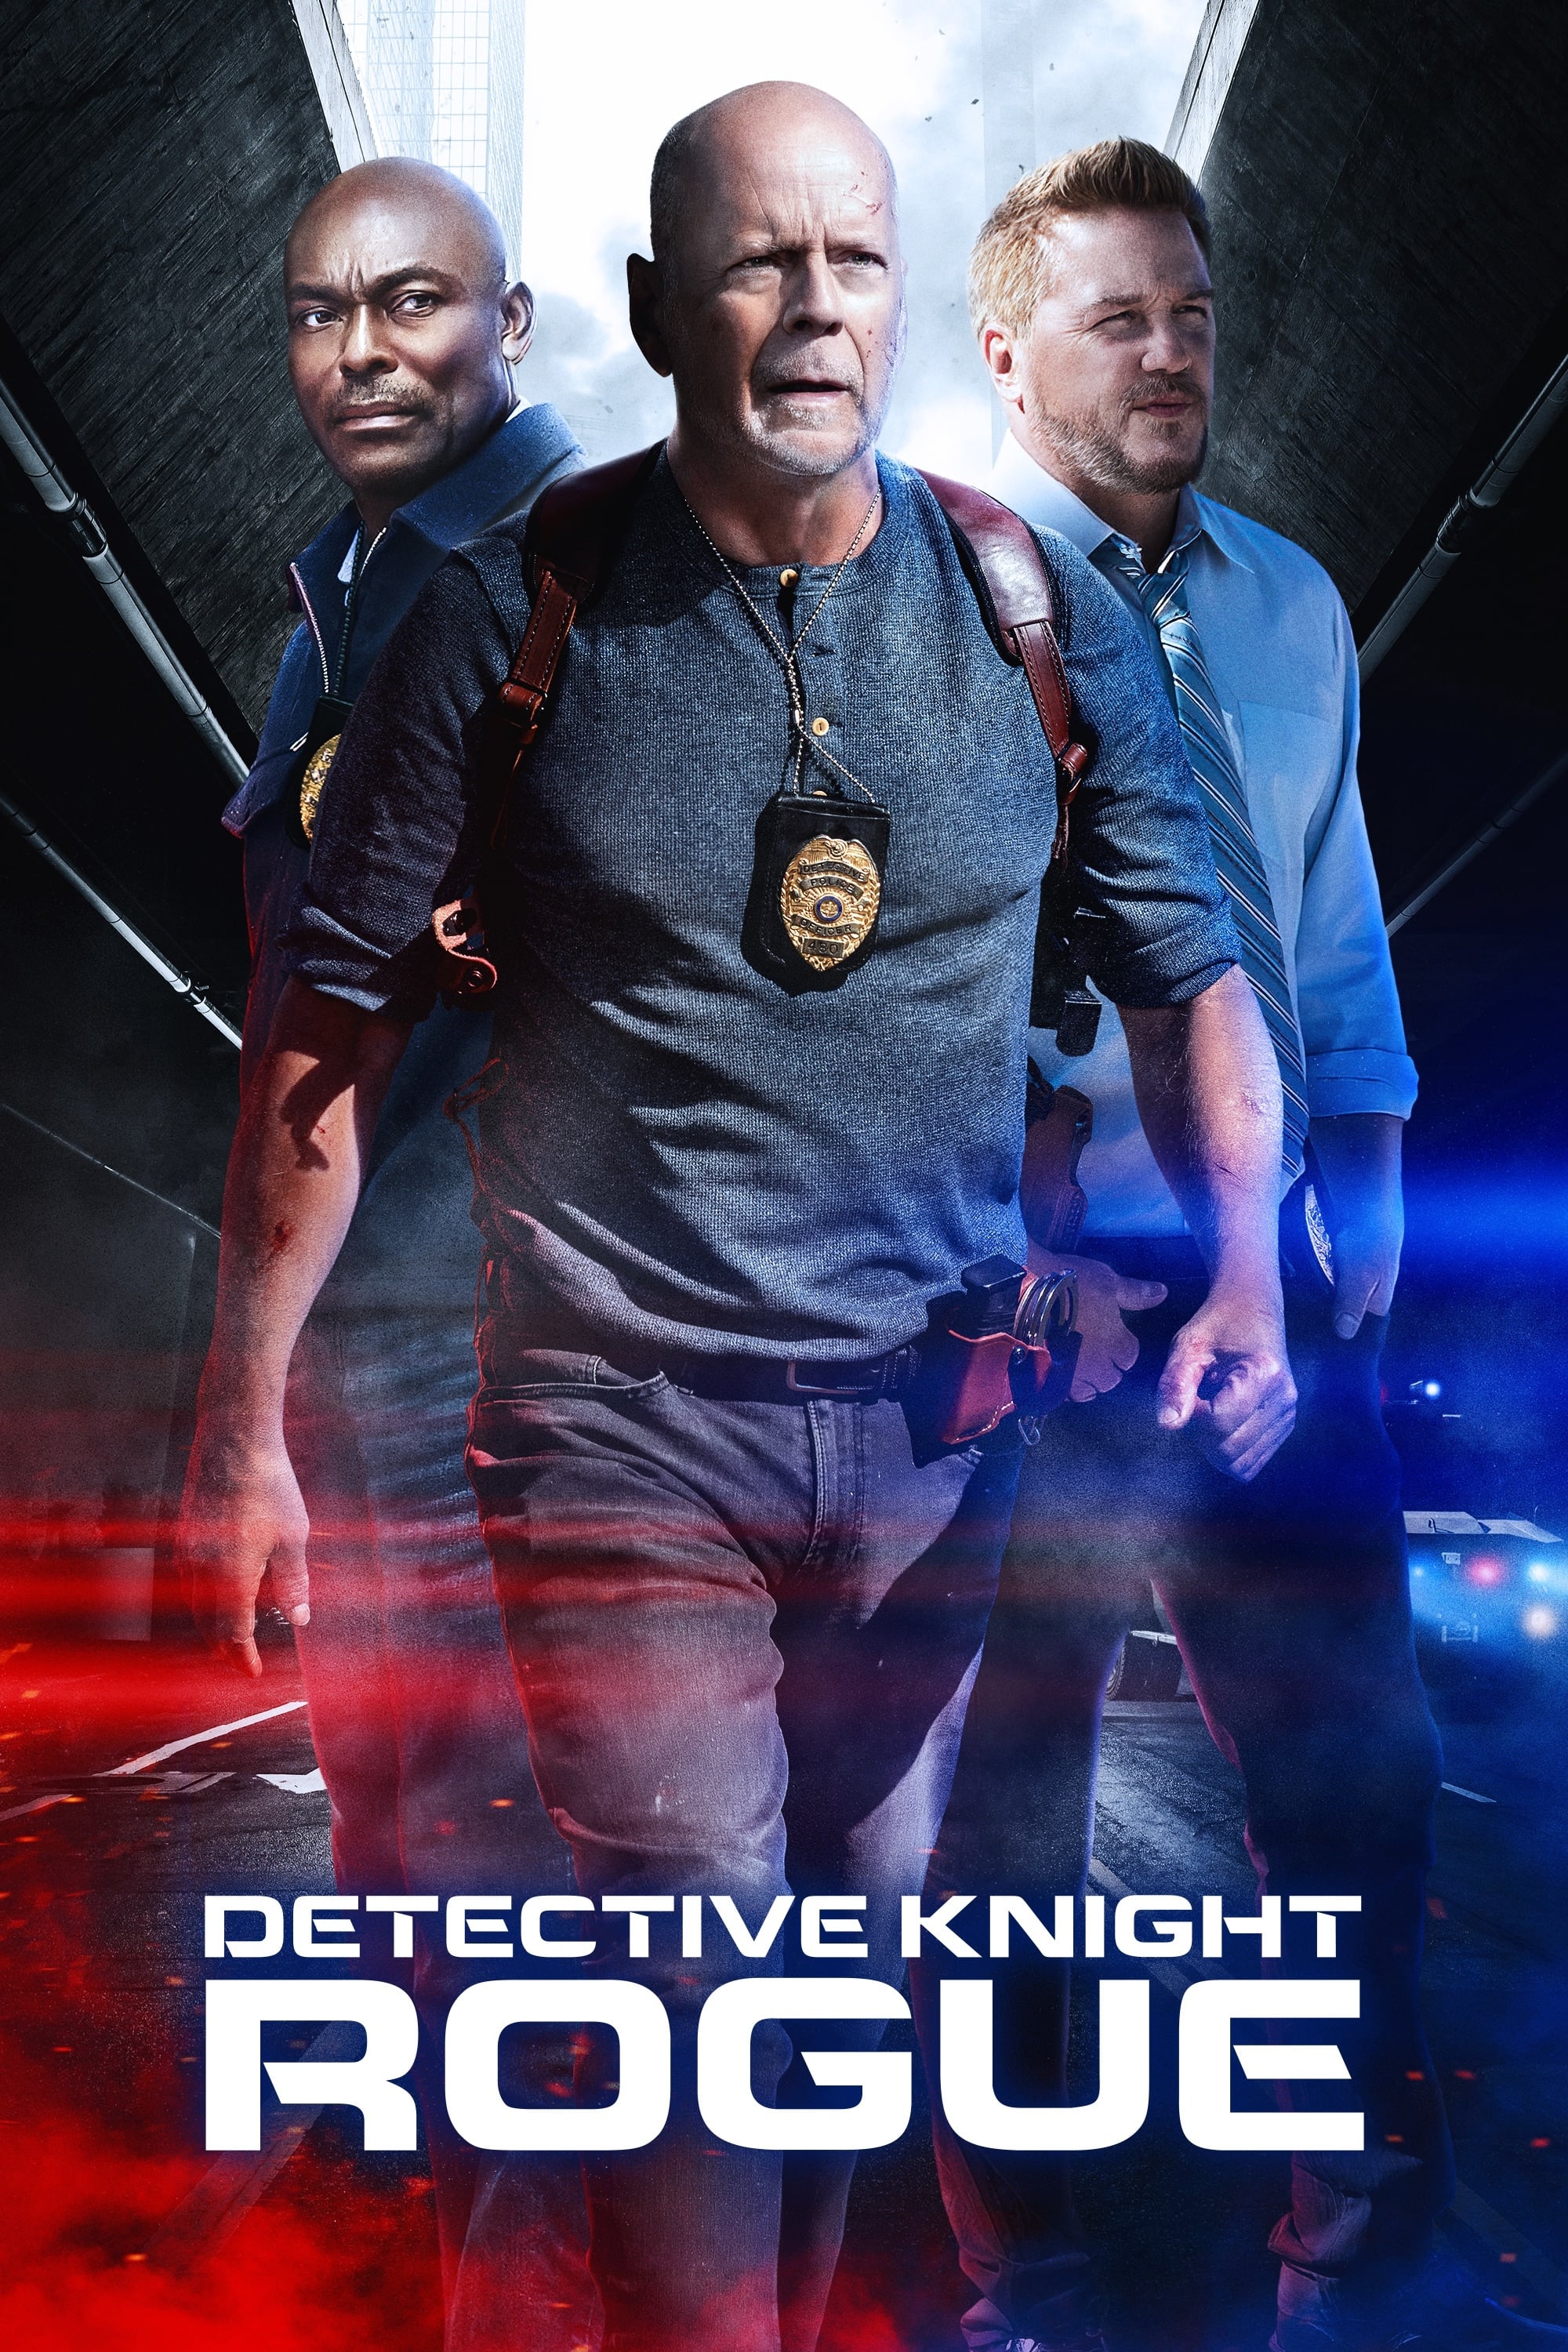 Detetive Knight: Justiça